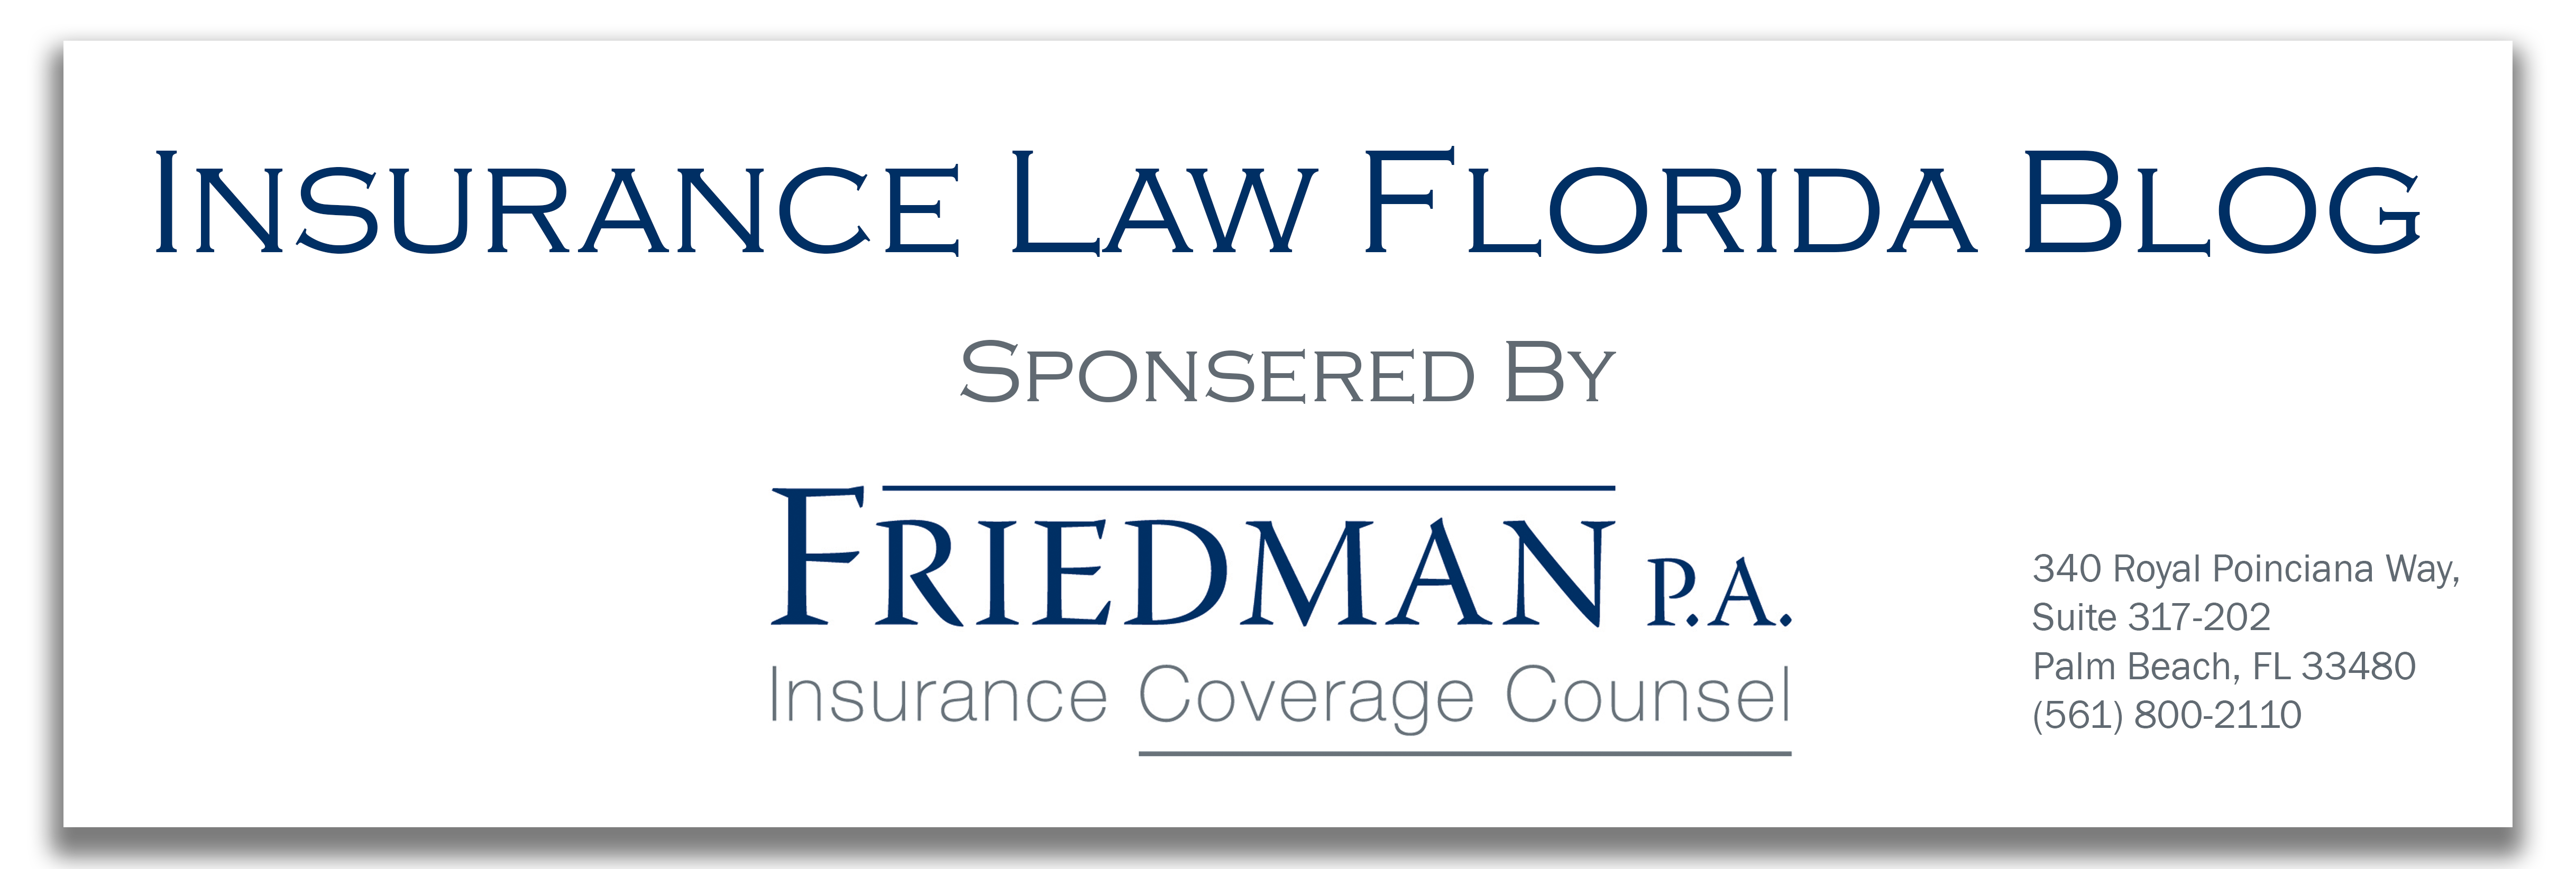 Insurance Law Florida